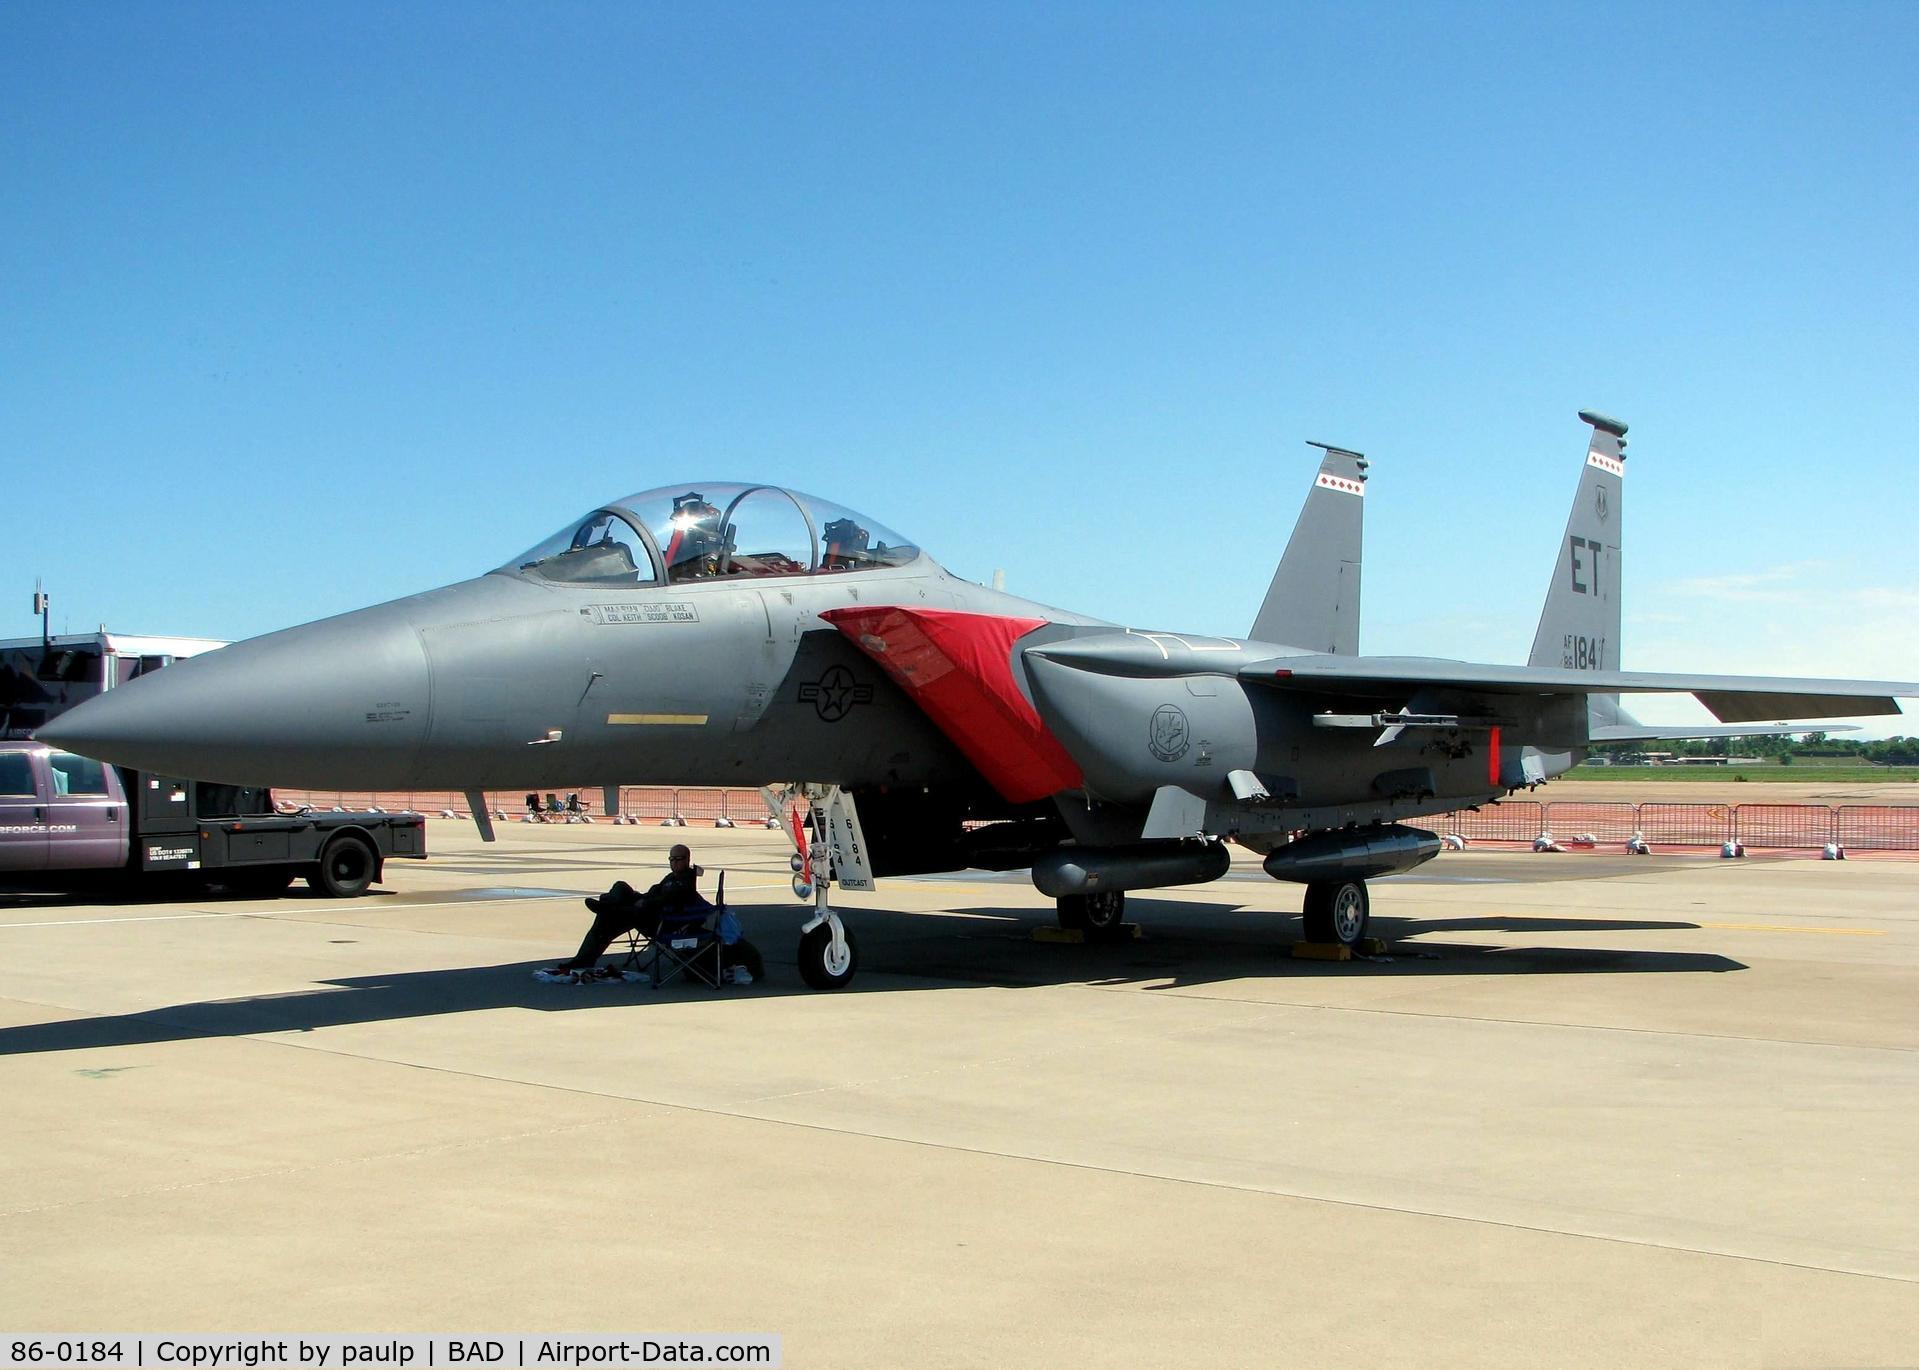 86-0184, 1986 McDonnell Douglas F-15E Strike Eagle C/N 0987/E002, At the Barksdale Air Force Base Air Show 2010.